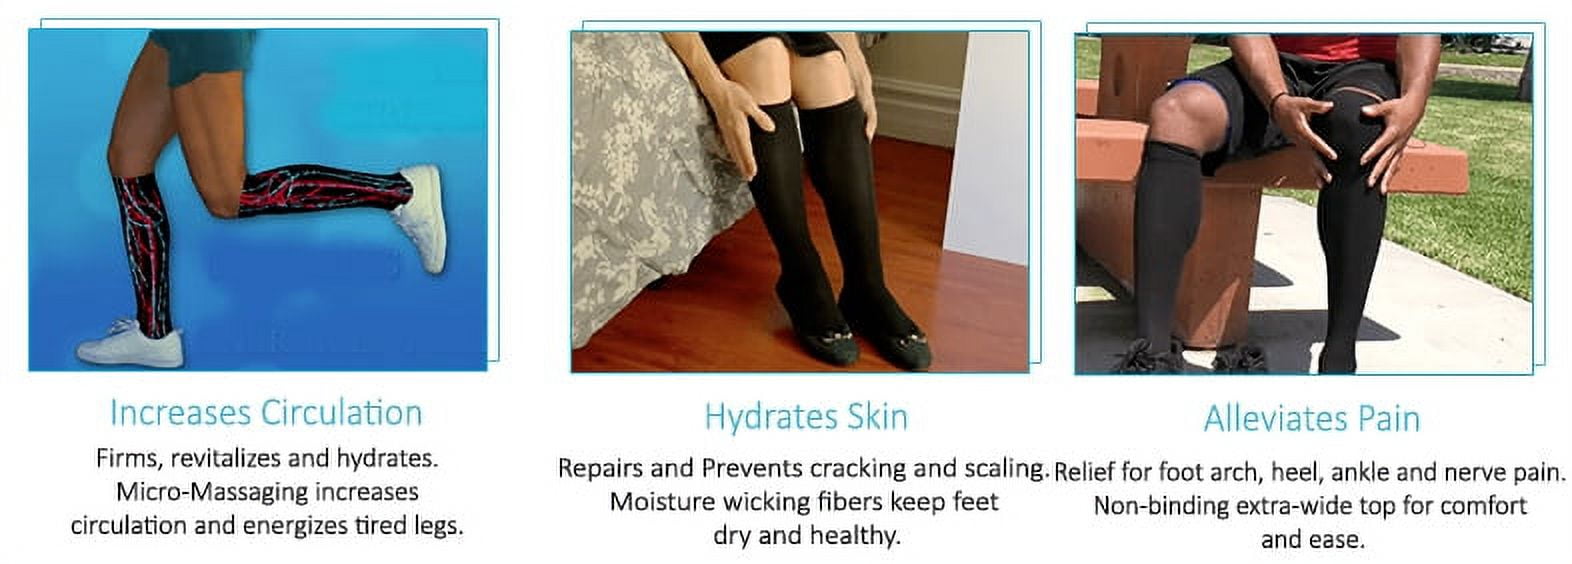 SKINEEZ black l/xl skin-reparative hydrating compression socks for women  and men 10-20 mmhg 